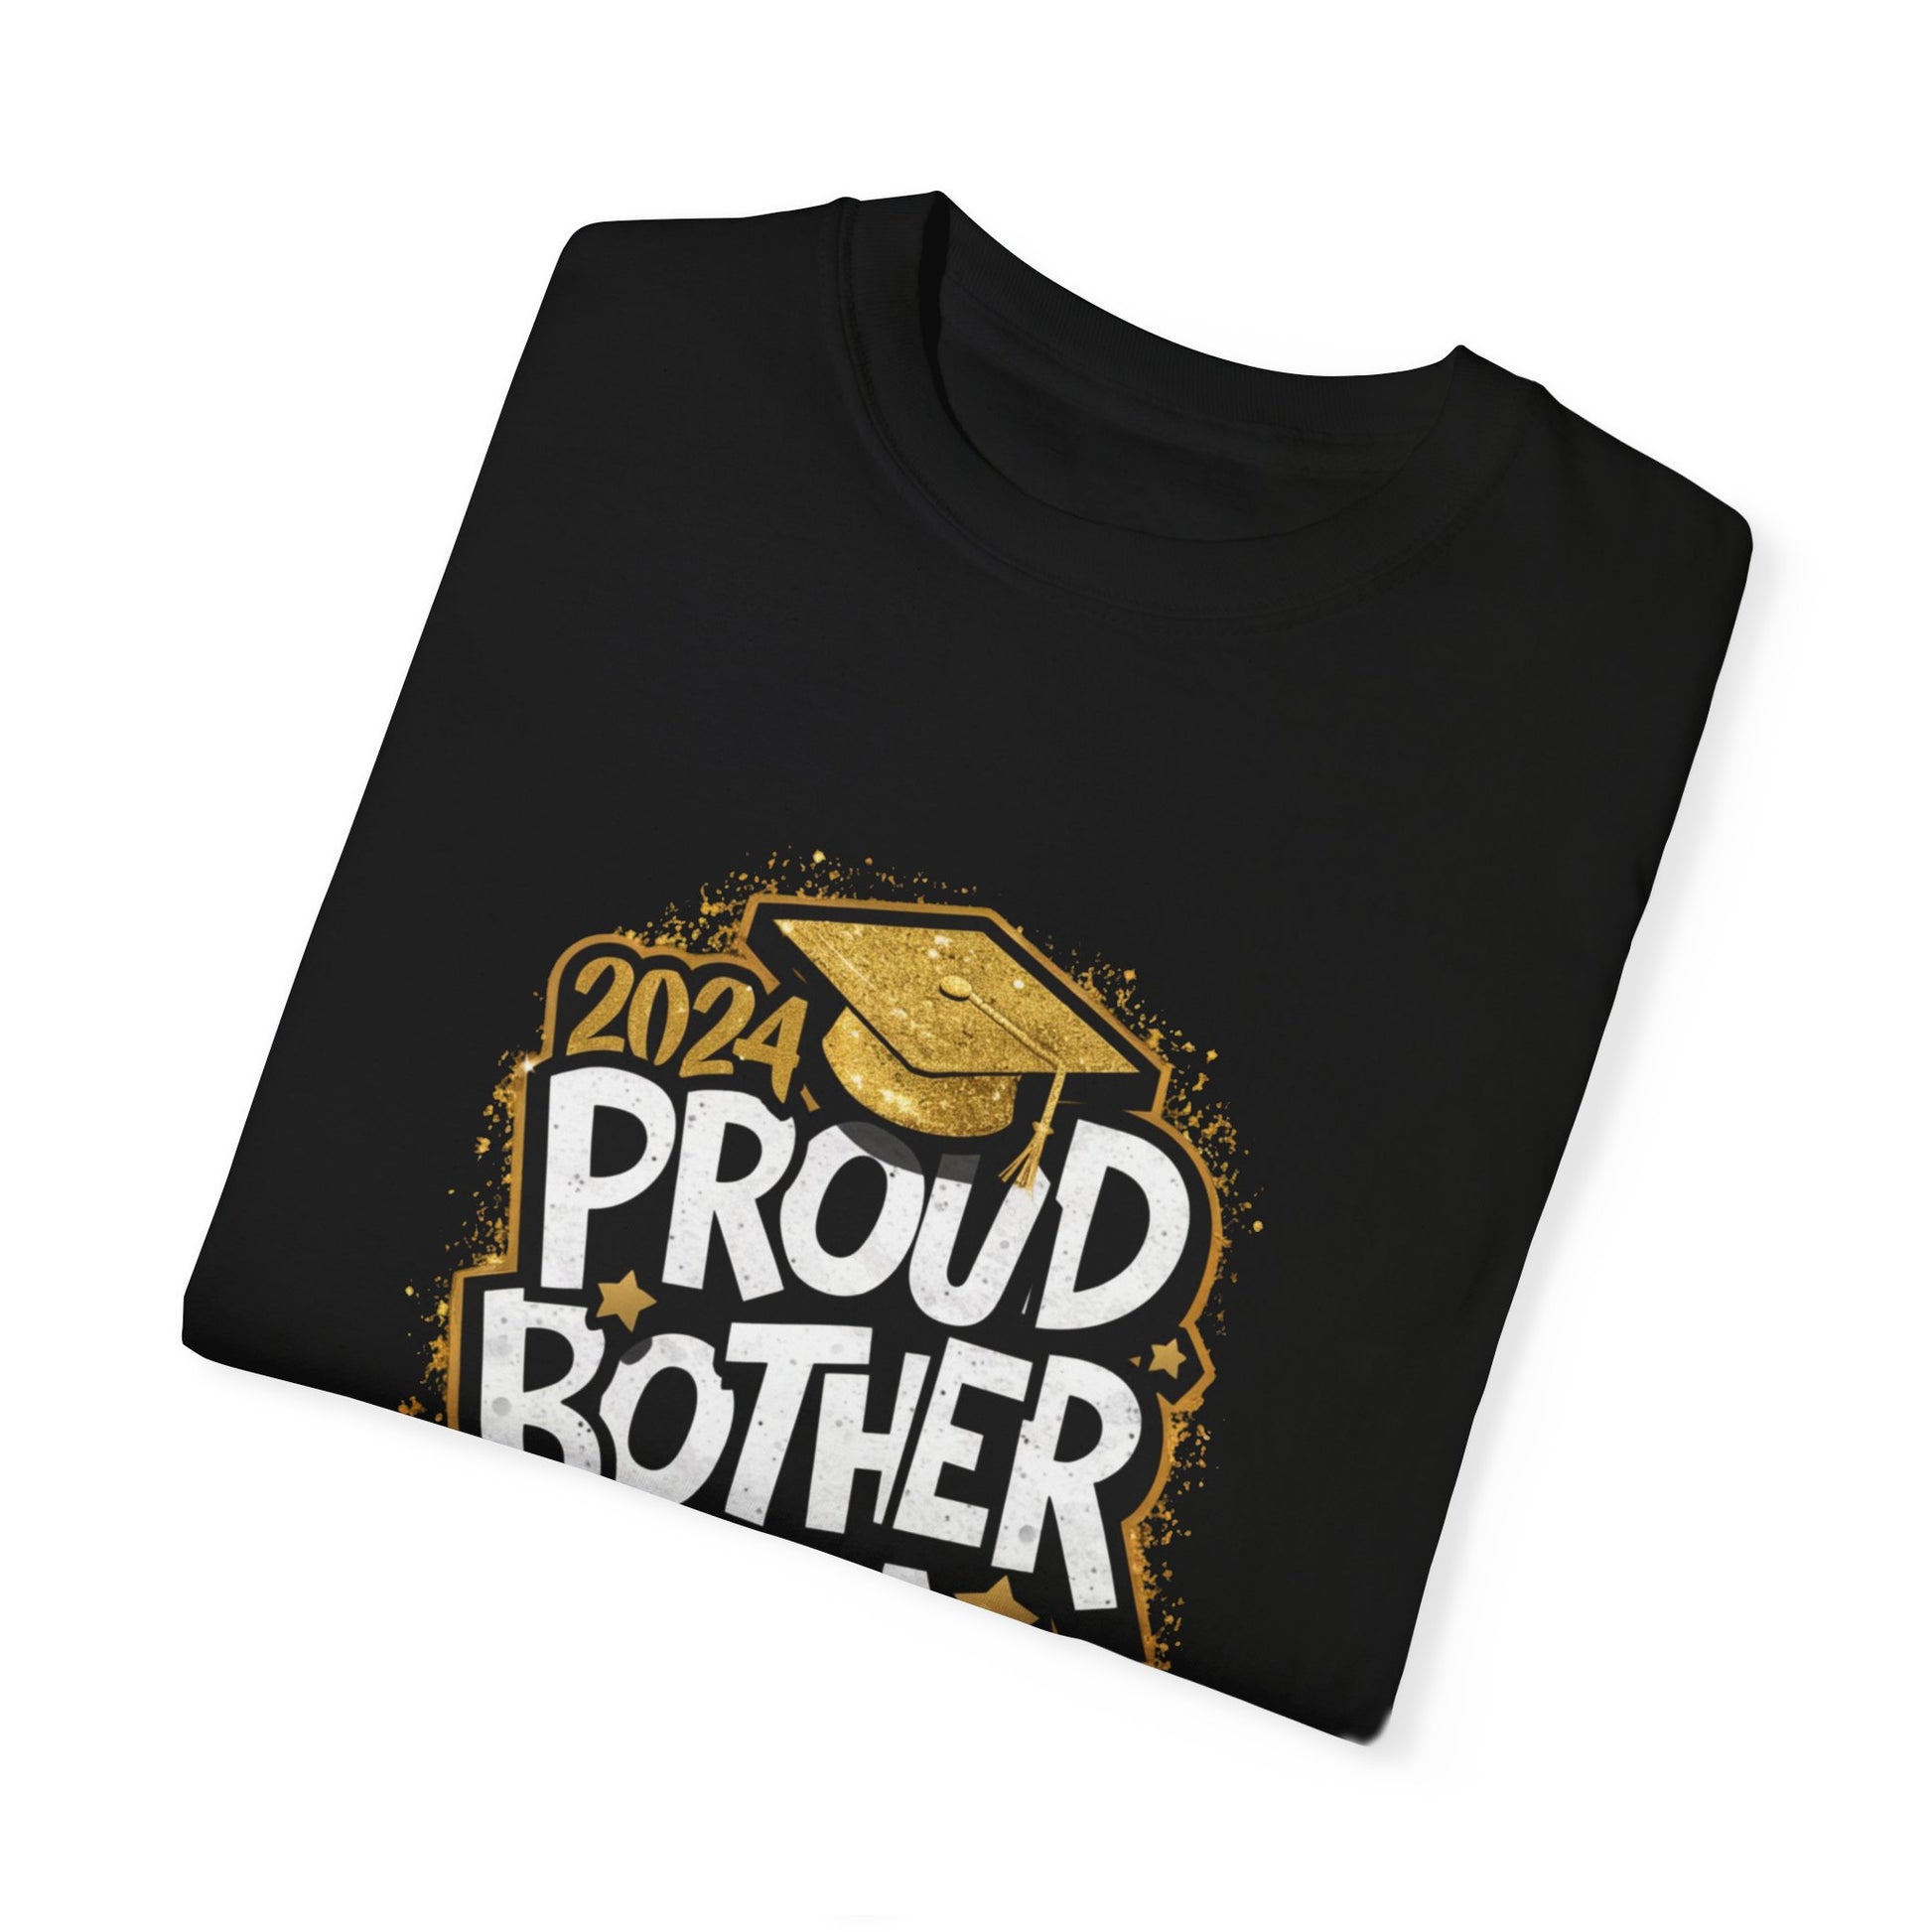 Proud Brother of a 2024 Graduate Unisex Garment-dyed T-shirt Cotton Funny Humorous Graphic Soft Premium Unisex Men Women Black T-shirt Birthday Gift-17